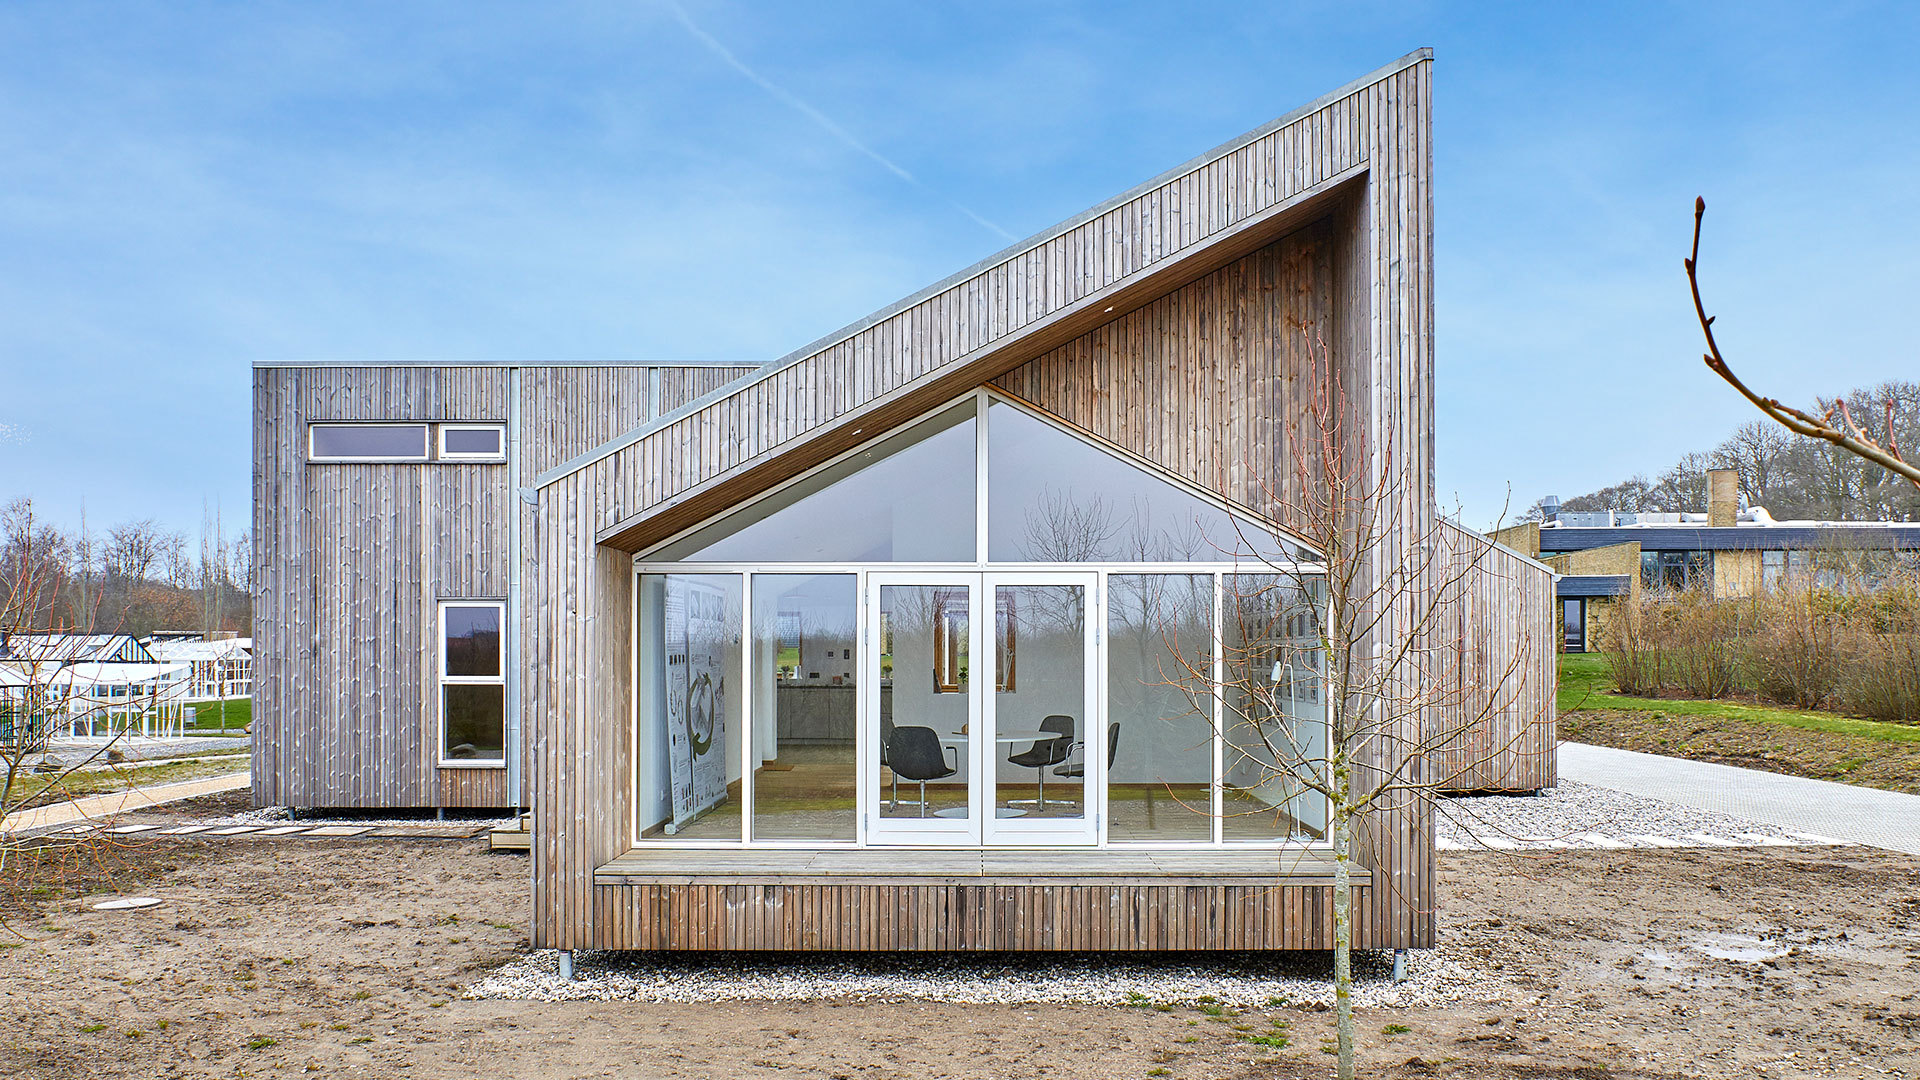 World’s first “organic” house in Denmark